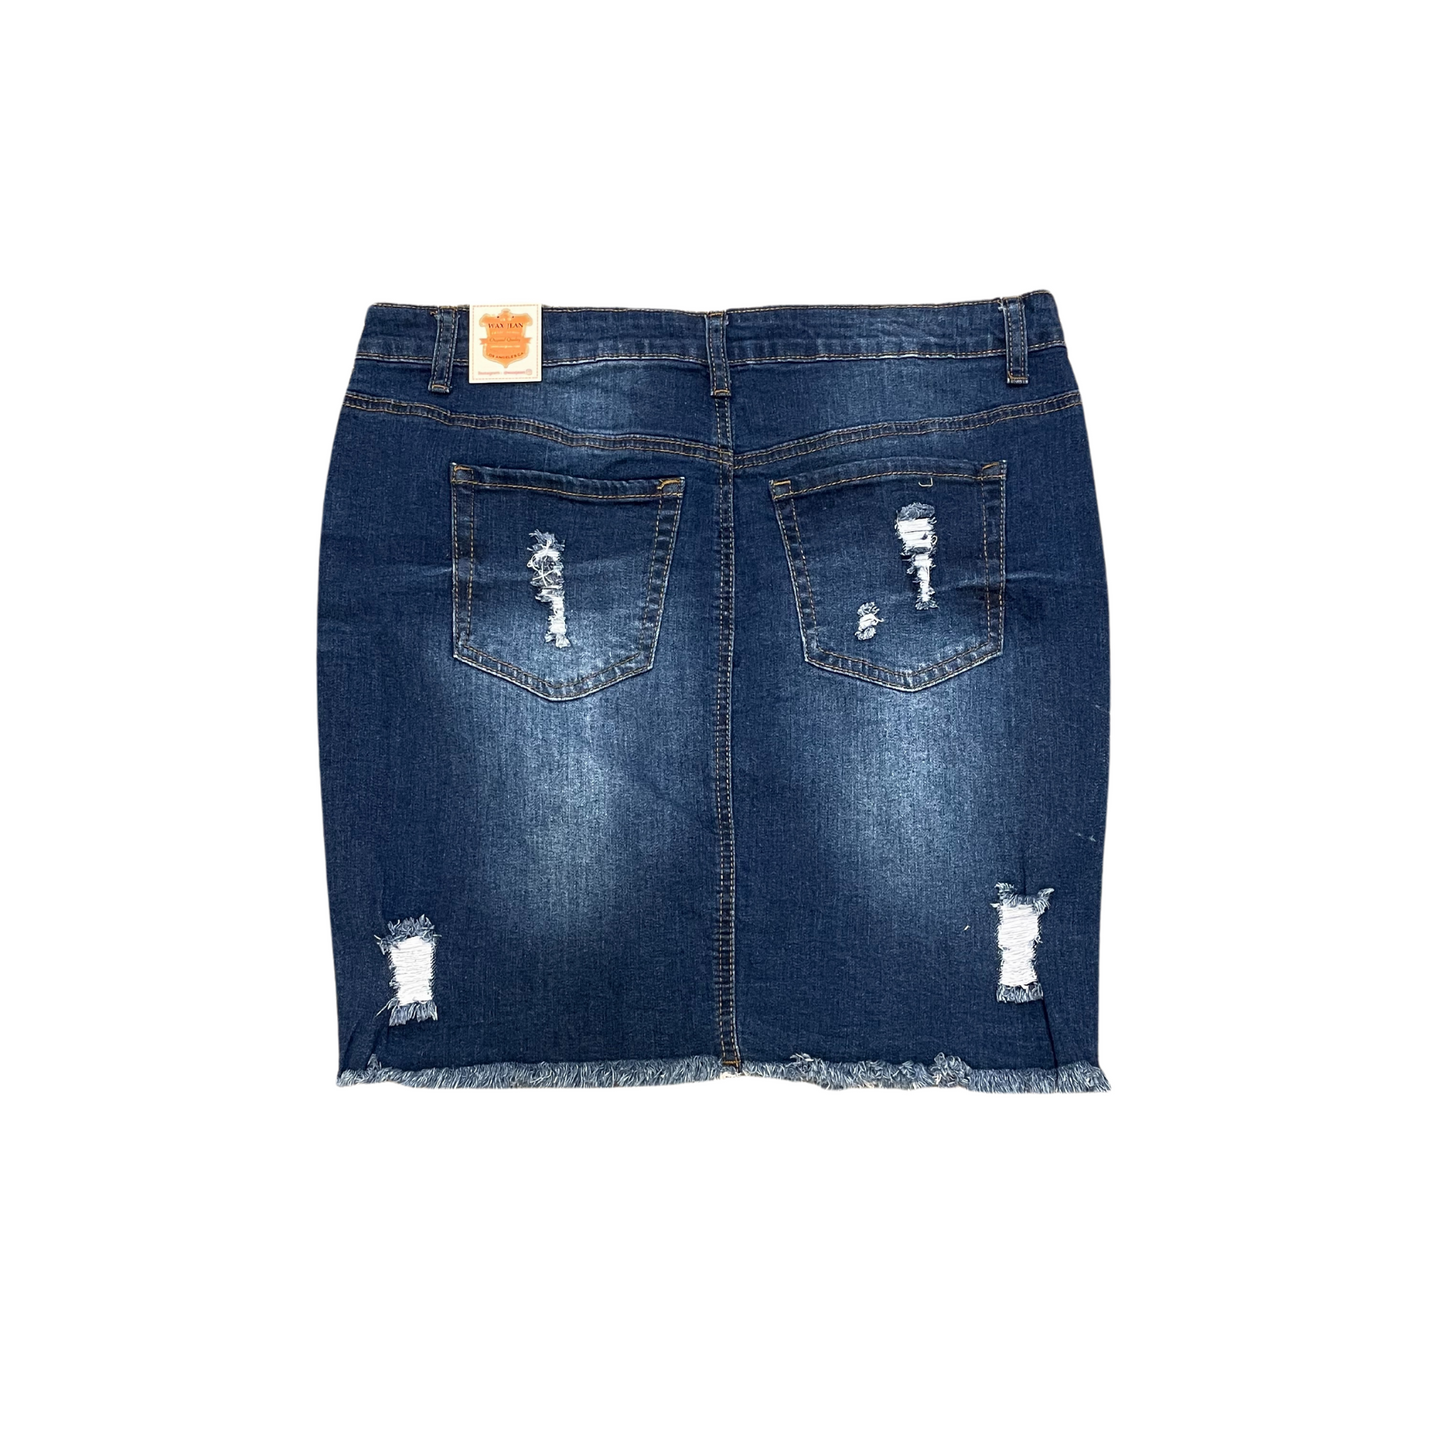 Wax Jeans Plus Size Distressed Denim Skirts (3 Colors! 1XL-3XL)